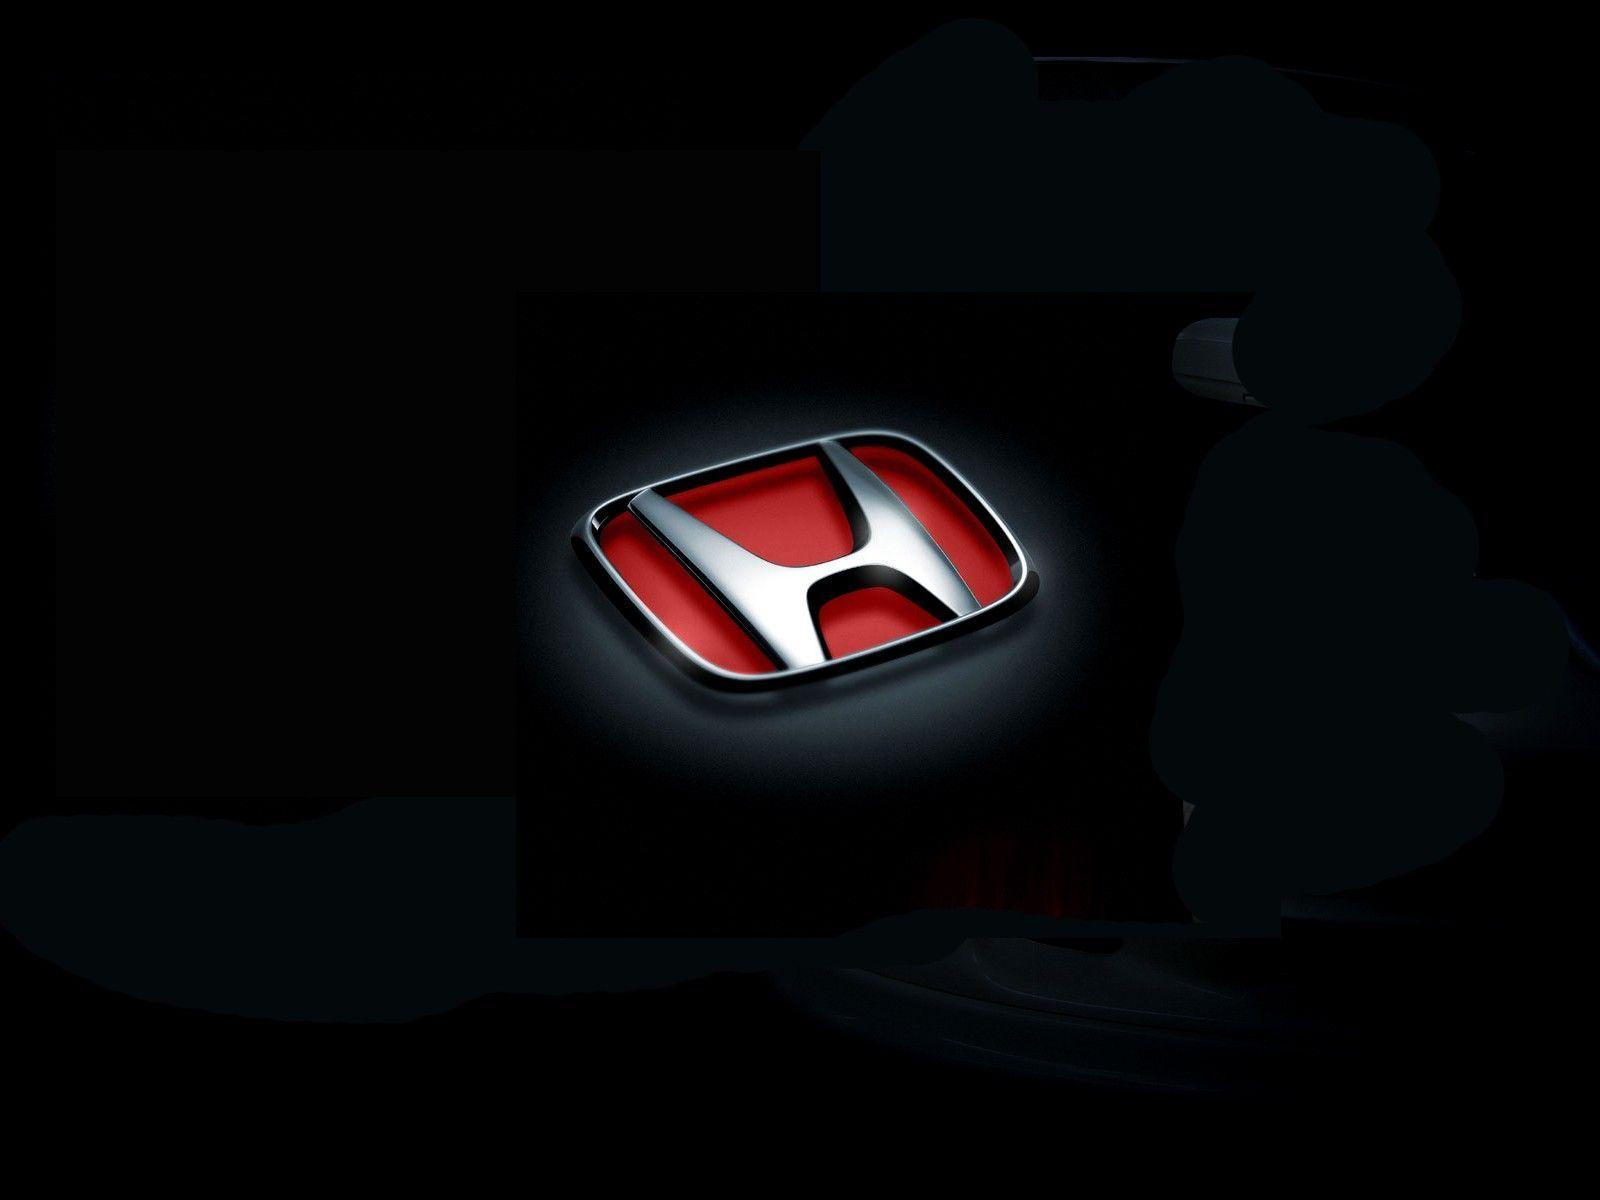 Honda Logo Wallpaper PC 881 Cool Walldiskpapercom. Cars